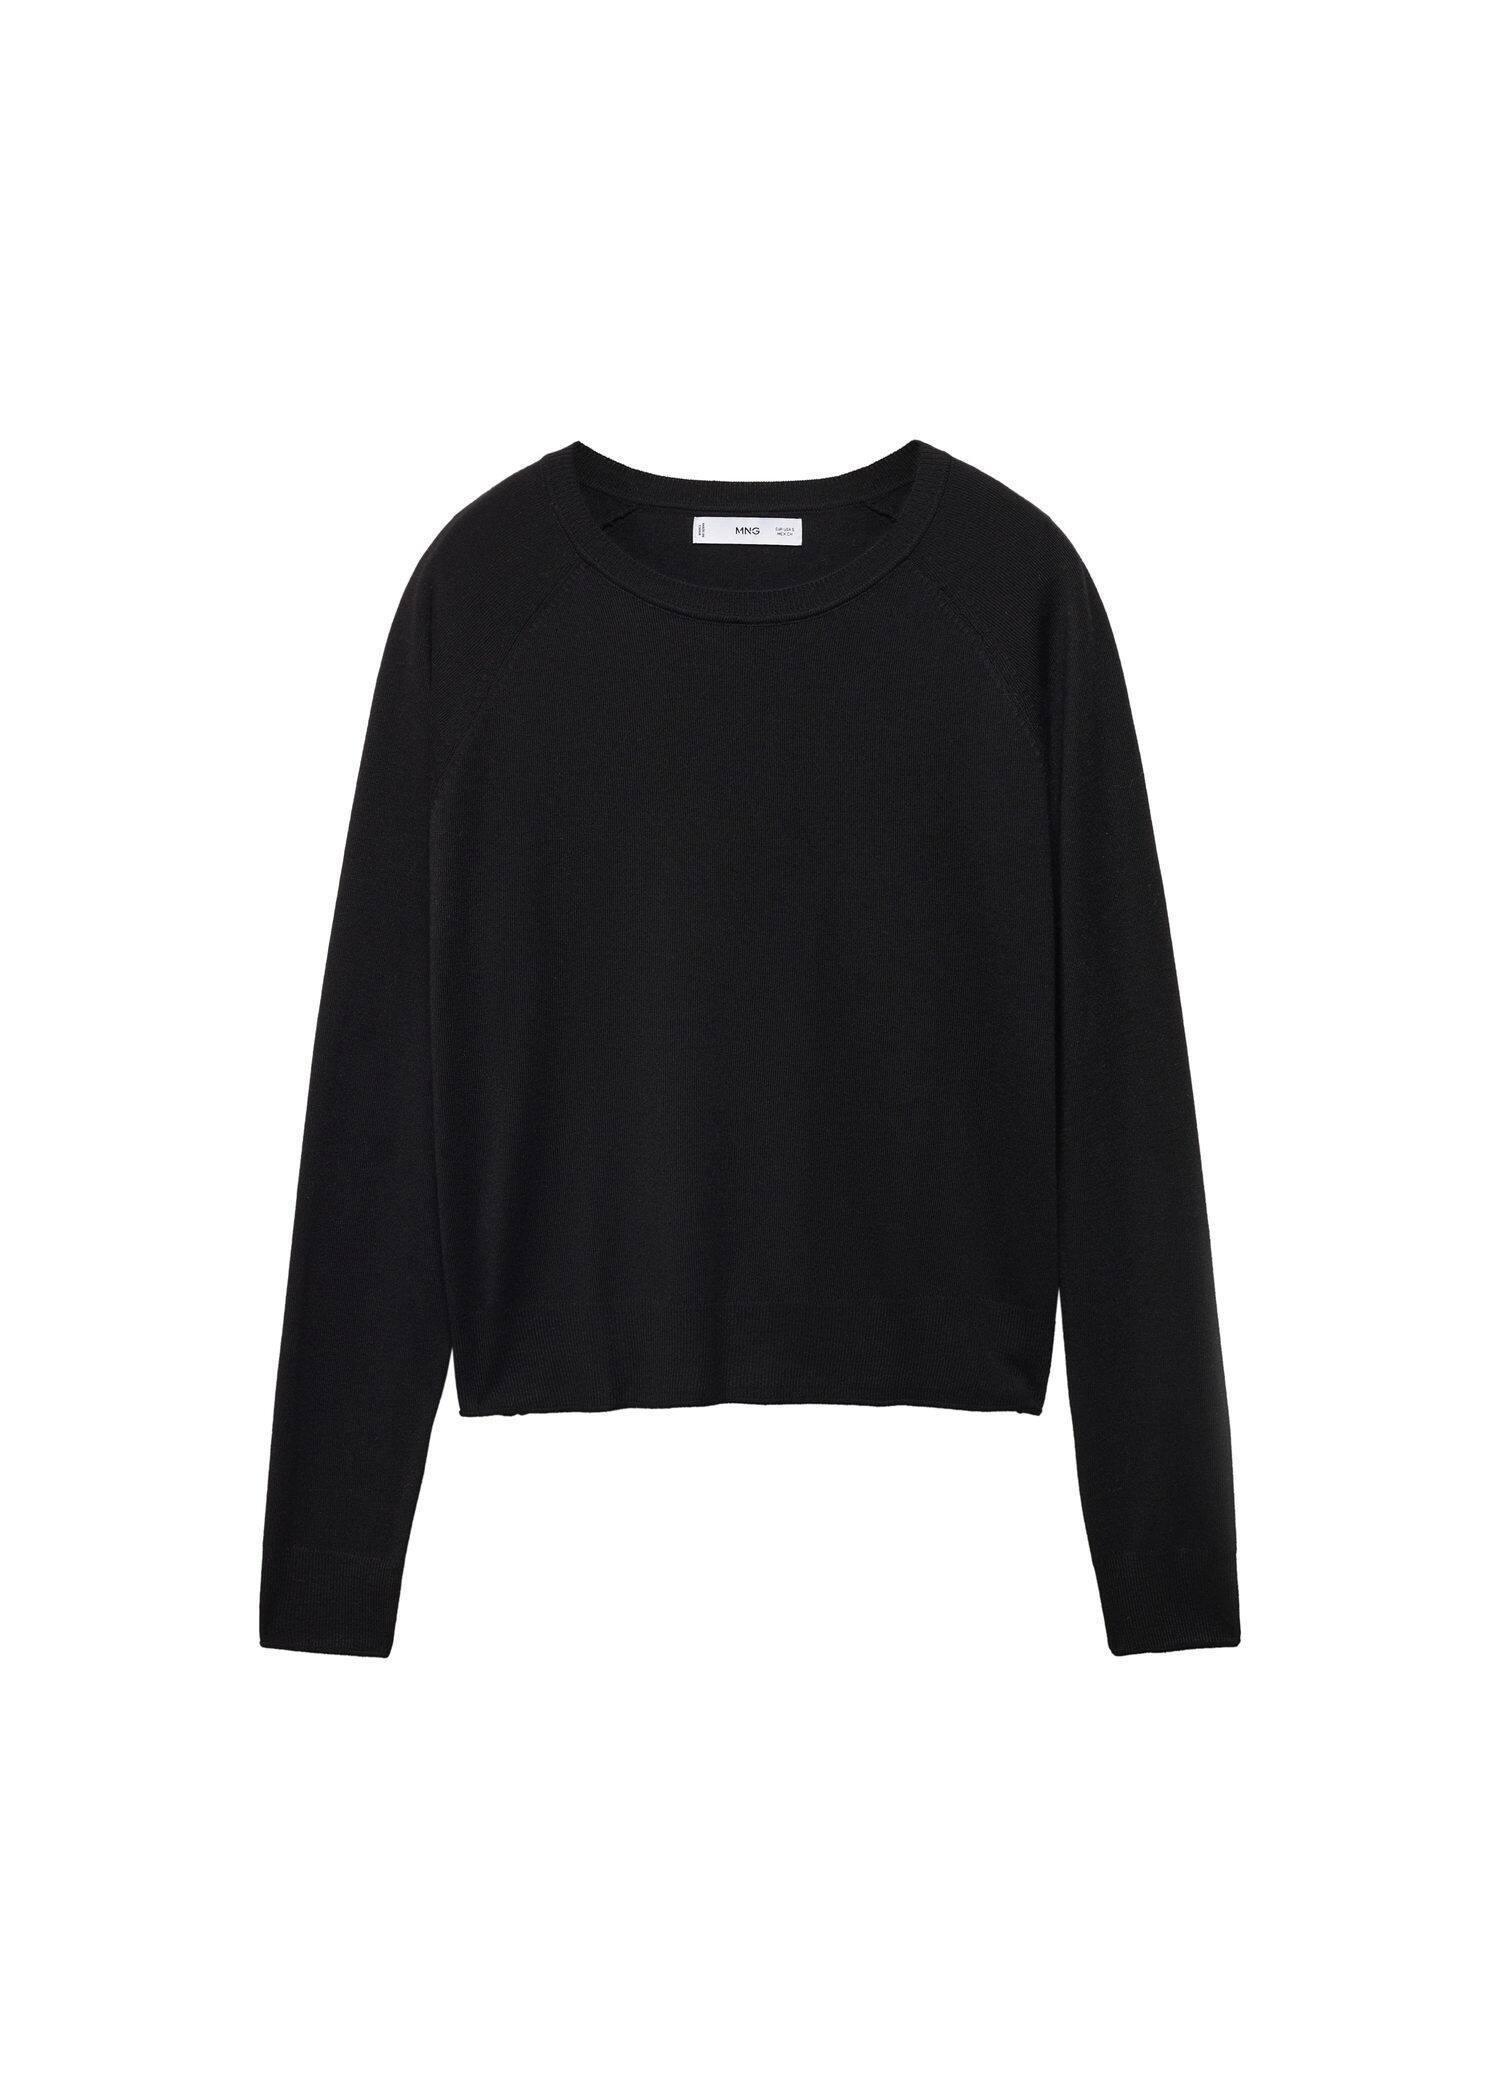 Mango - Black Fine-Knit Turtleneck Sweater